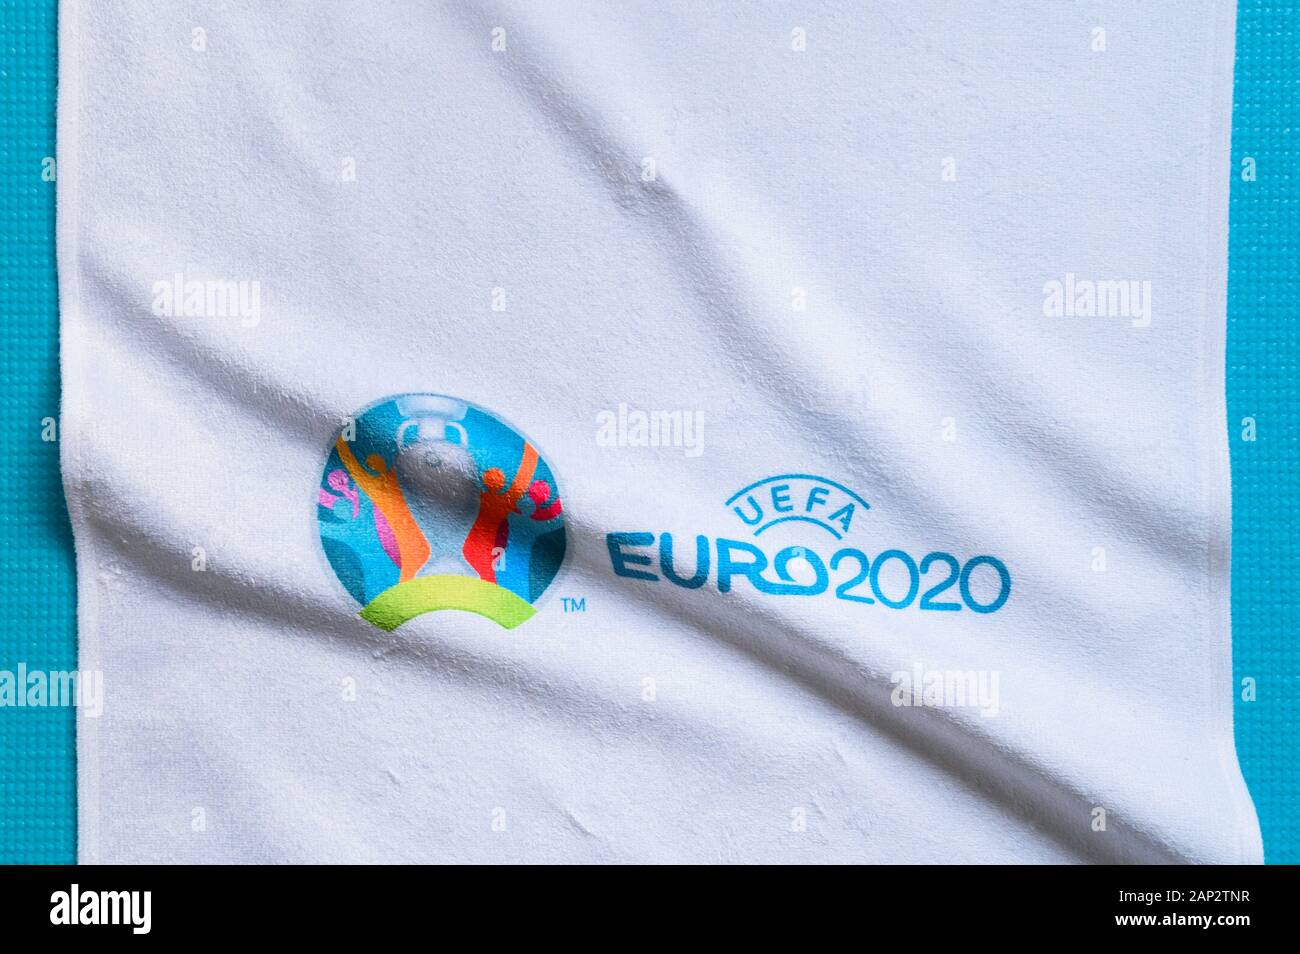 PARIS, FRANCE, JANUARY. 20. 2020: Euro 2020, official logo, white edit space Stock Photo